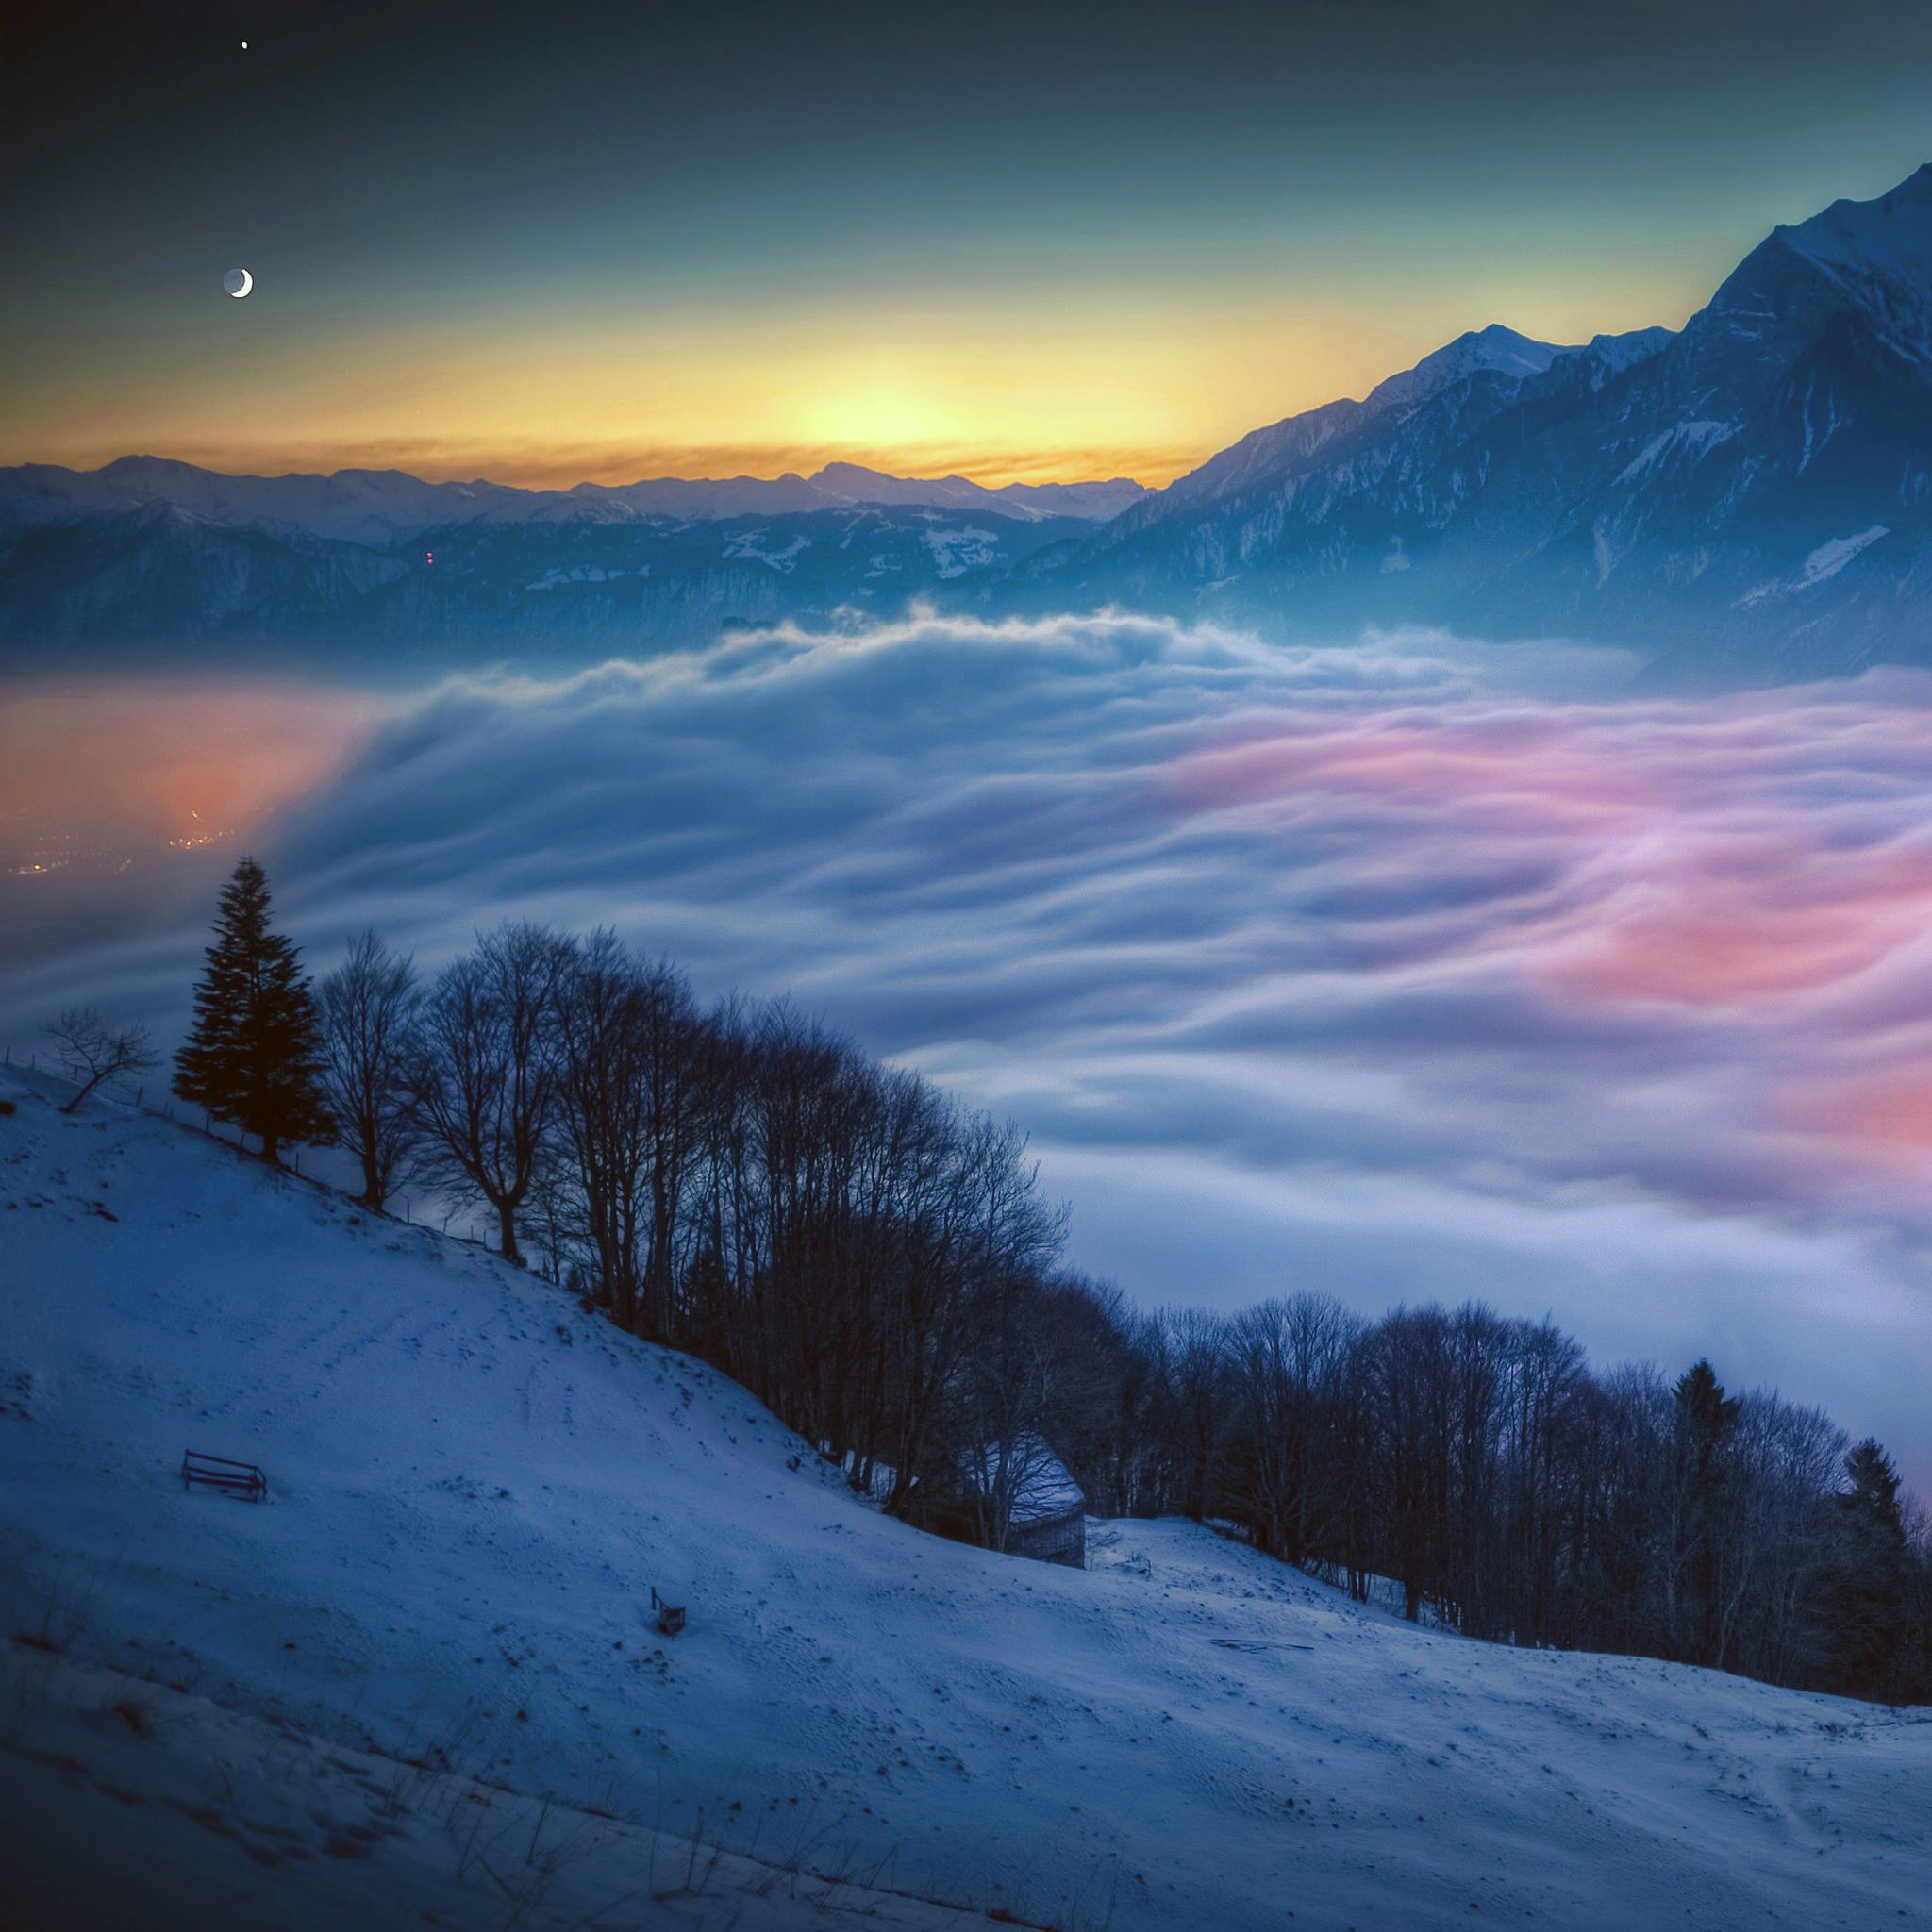 Snowy Mountain Landscape Night Wallpaper Sc iPad